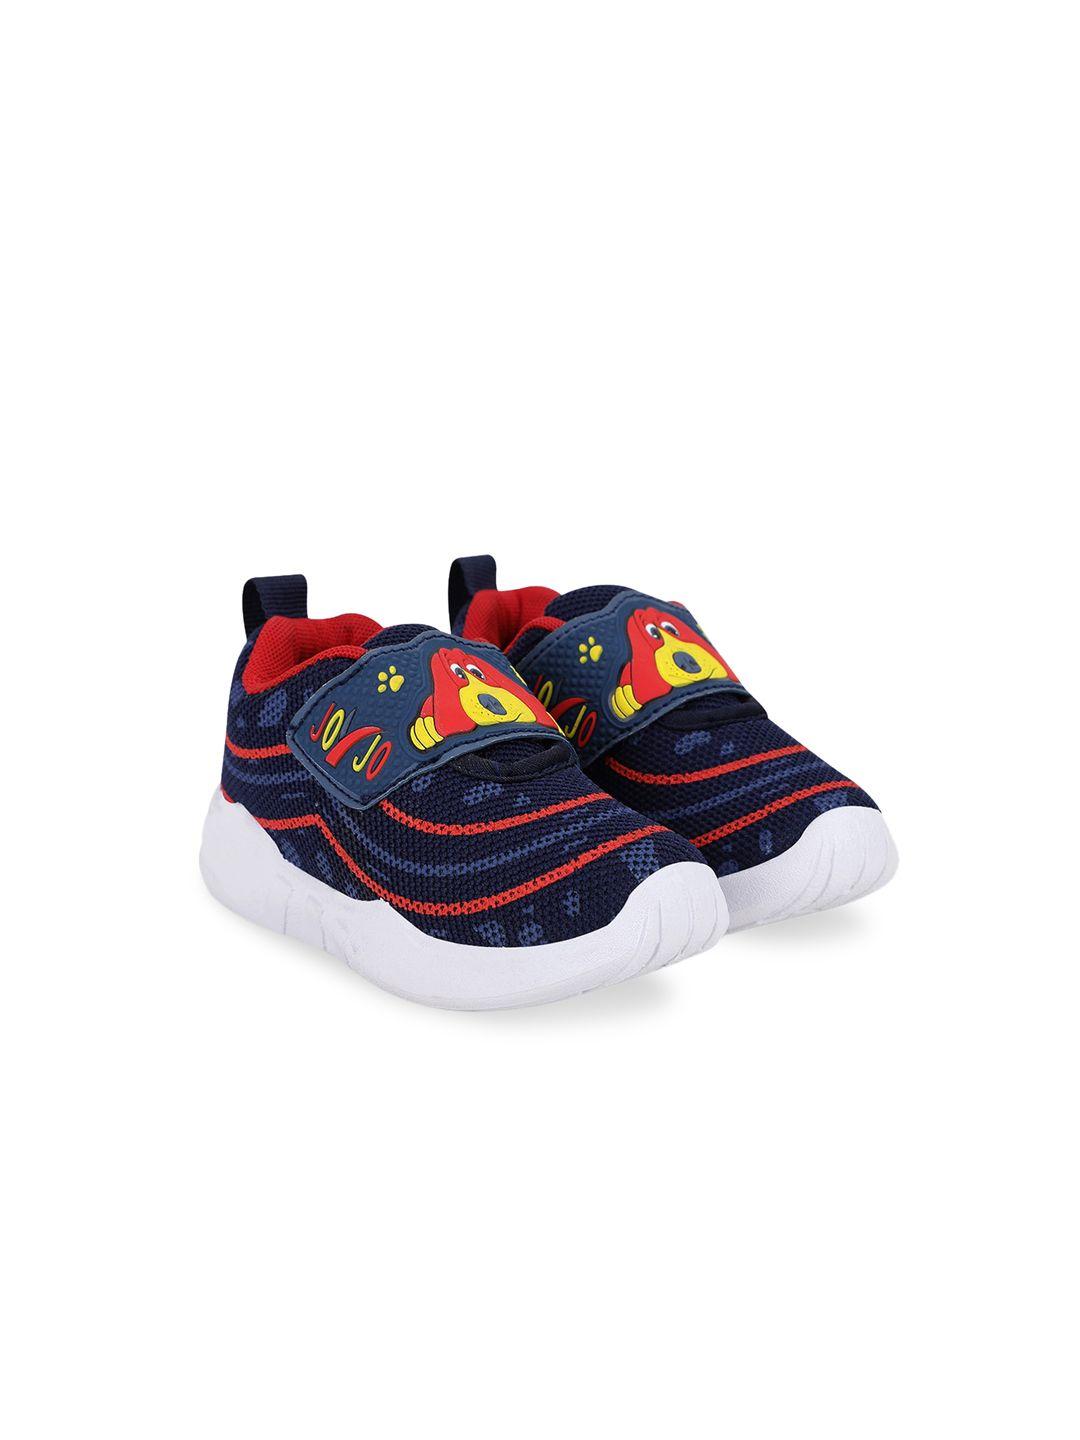 neobaby unisex kids navy blue woven design sneakers